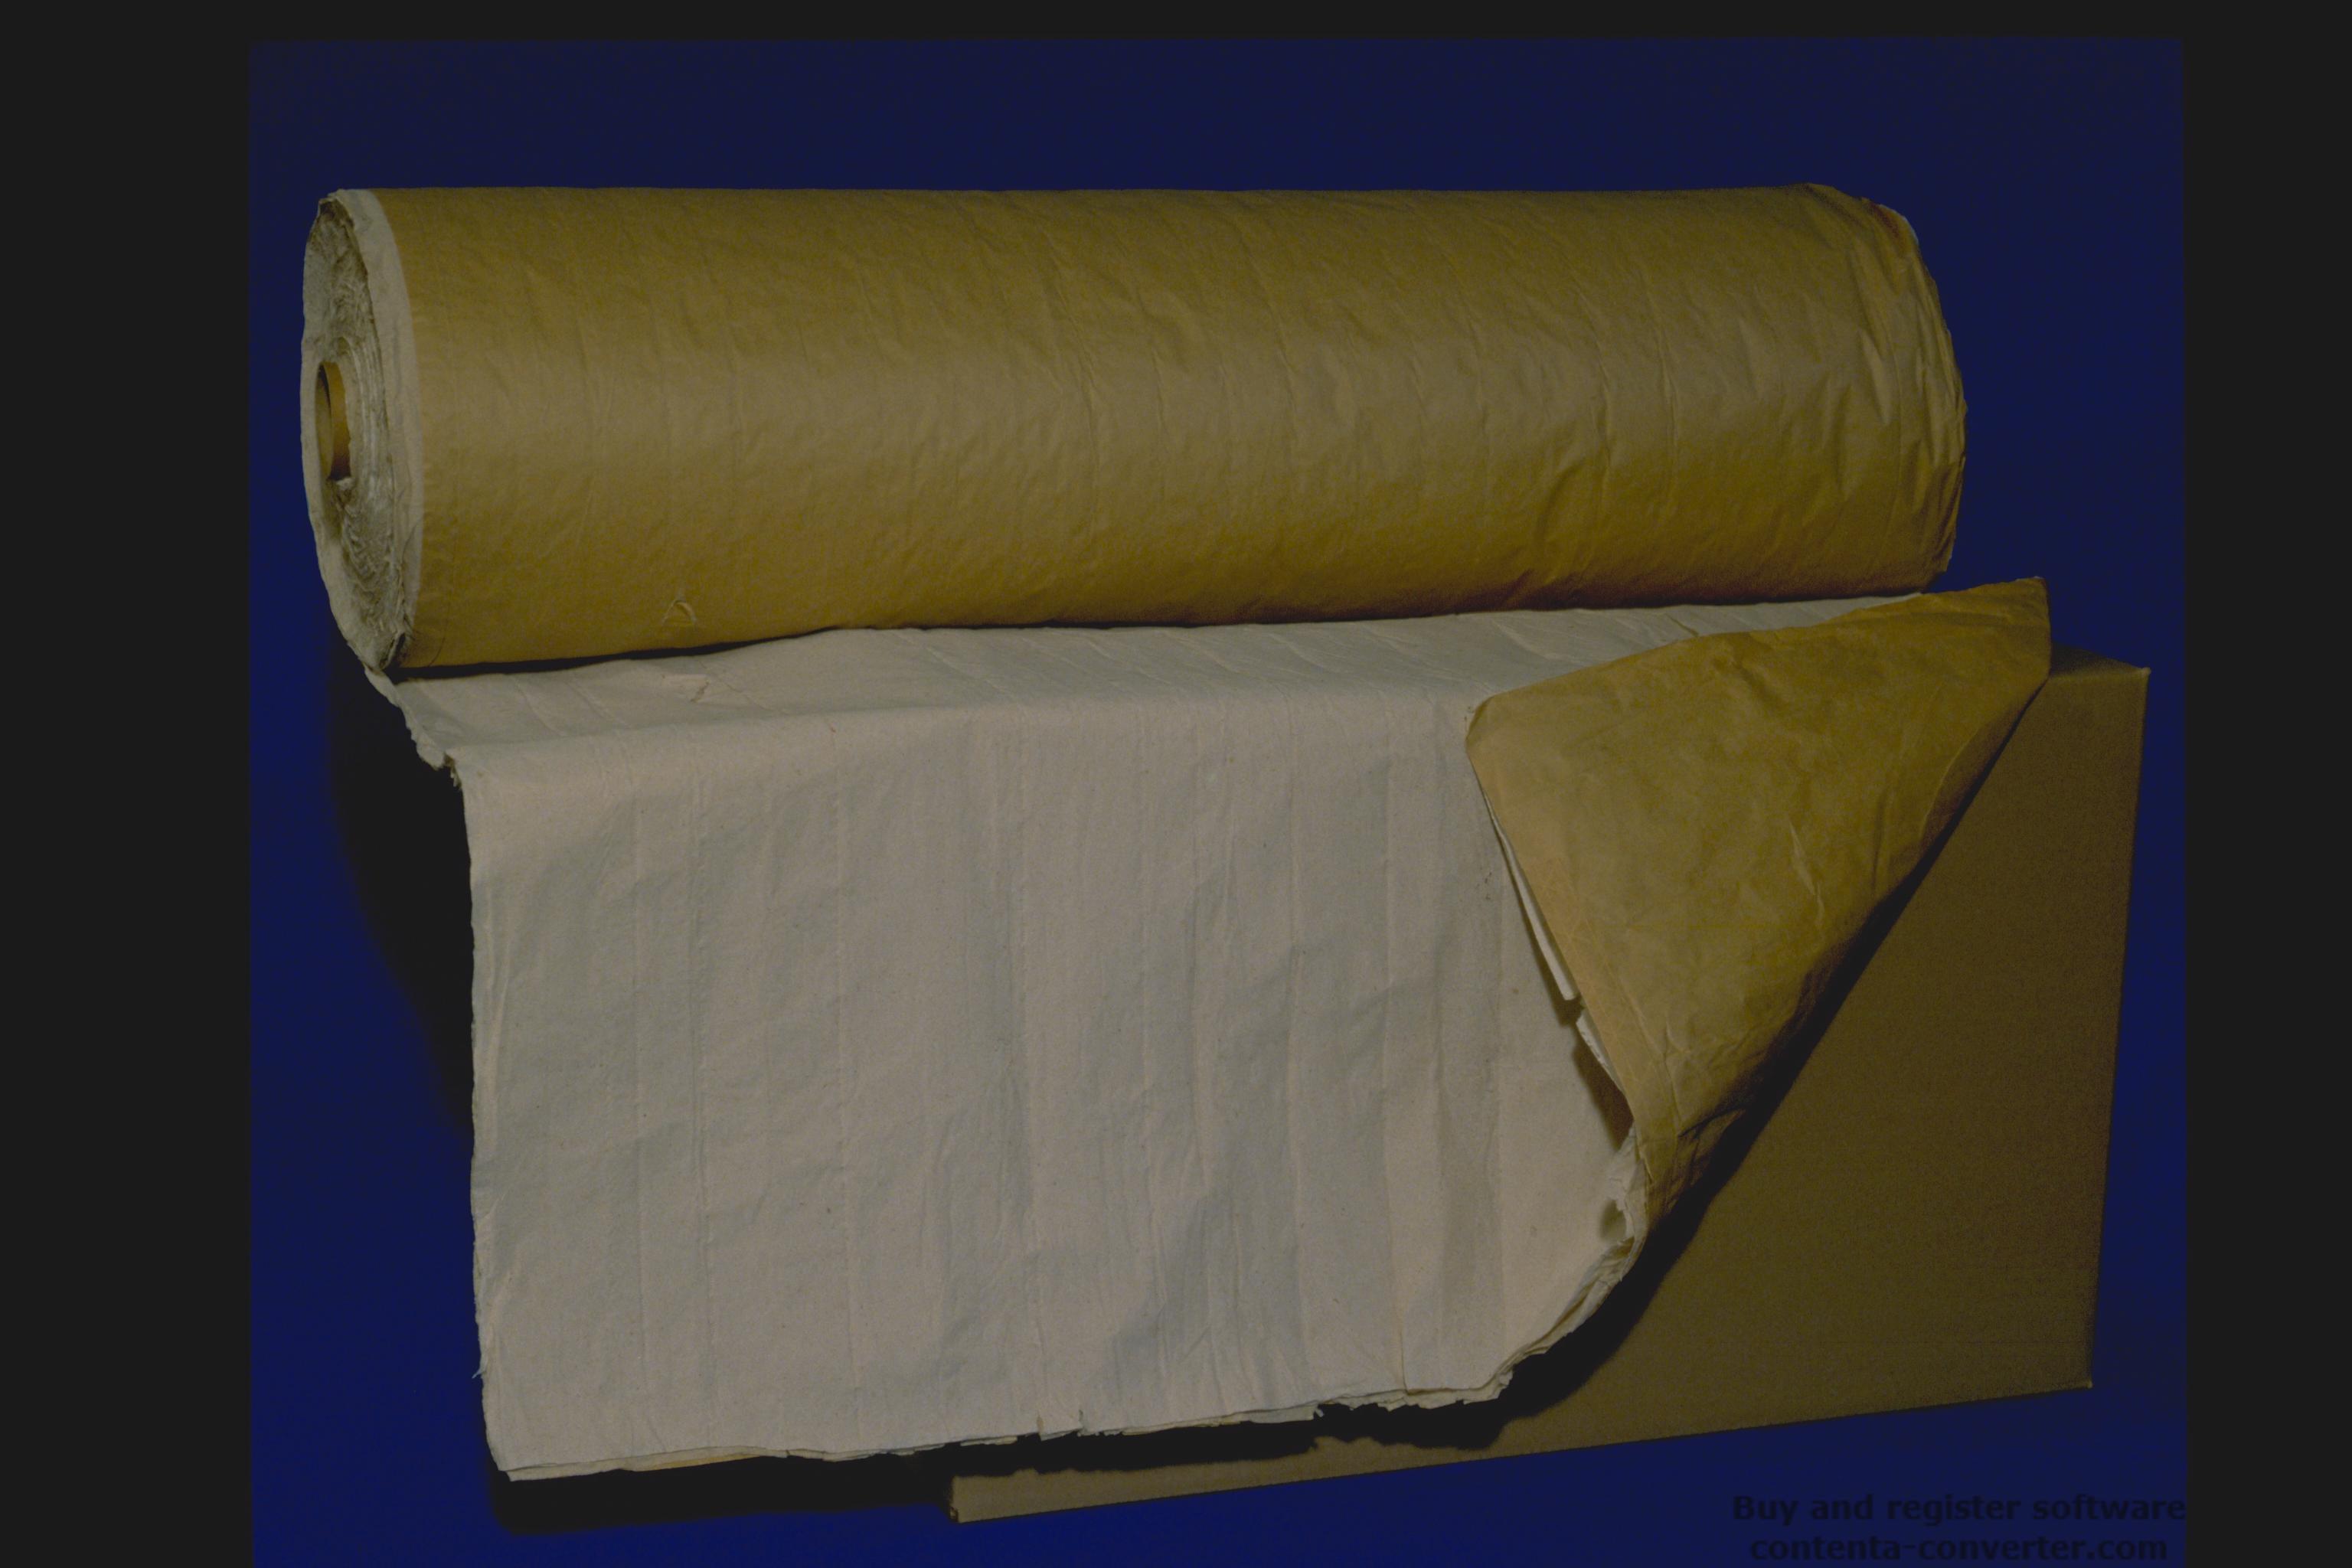 mover rolls, paper blanket